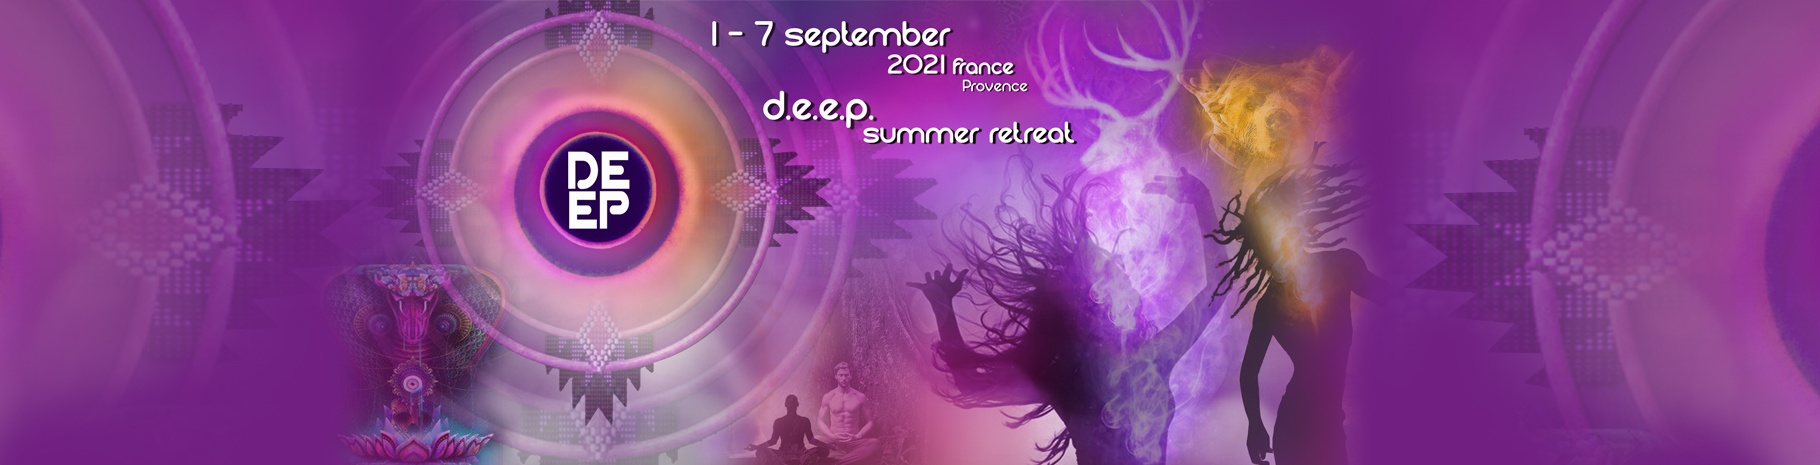 D.E.E.P. Summer Retreat 2021